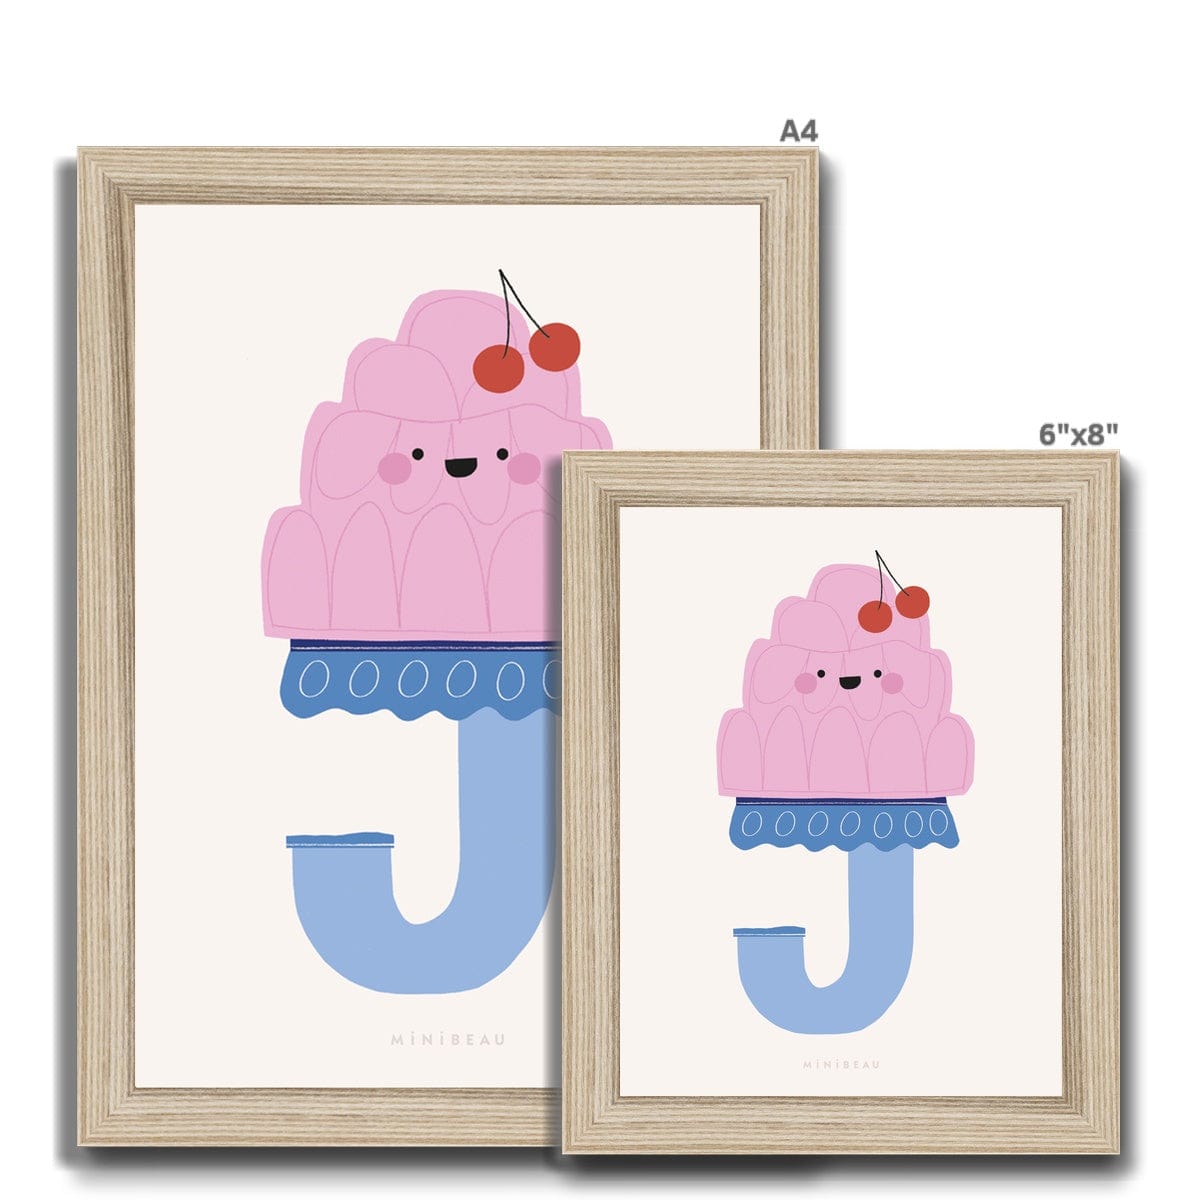 Happy Alphabet 'J' Art Print